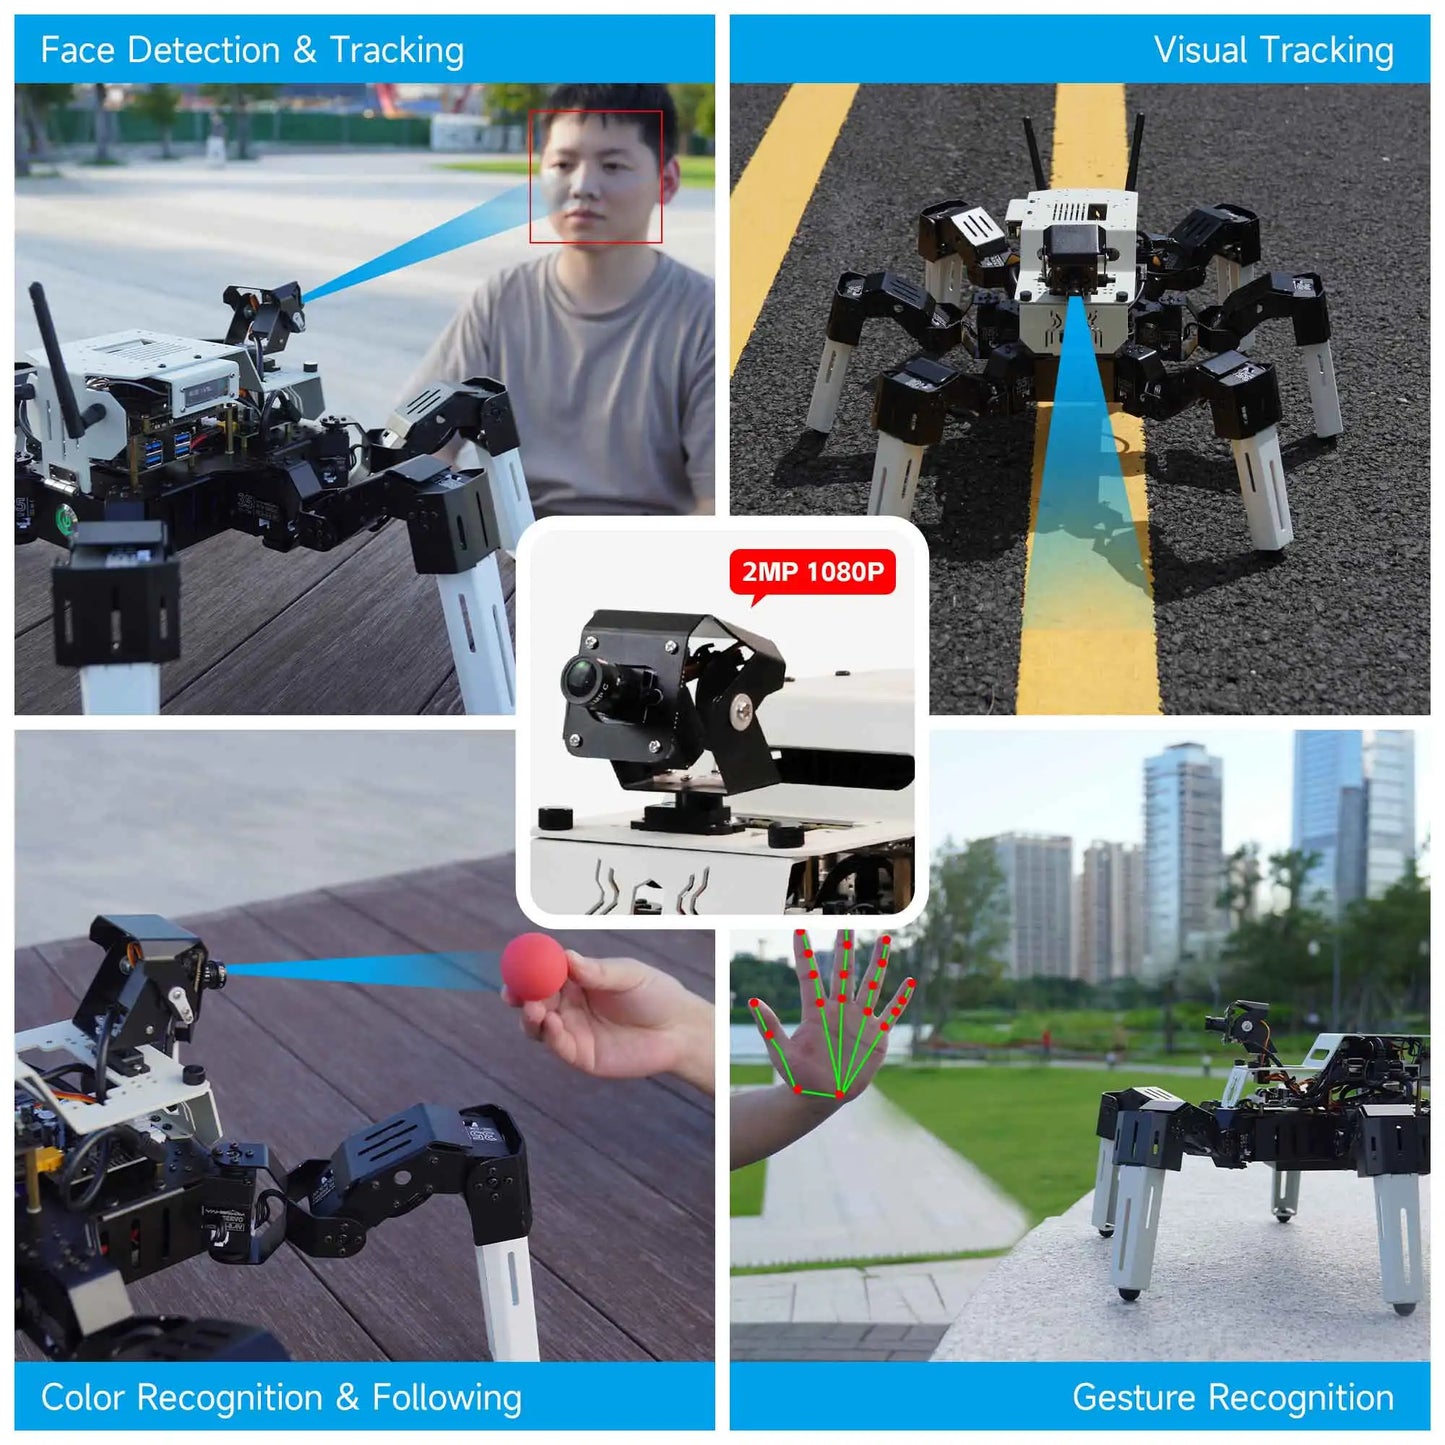 18DOF AI Intelligent Vision Recognition Hexapod Spider Robot Python Programming Education Kit for RaspberryPi 4B and Jetson Nano